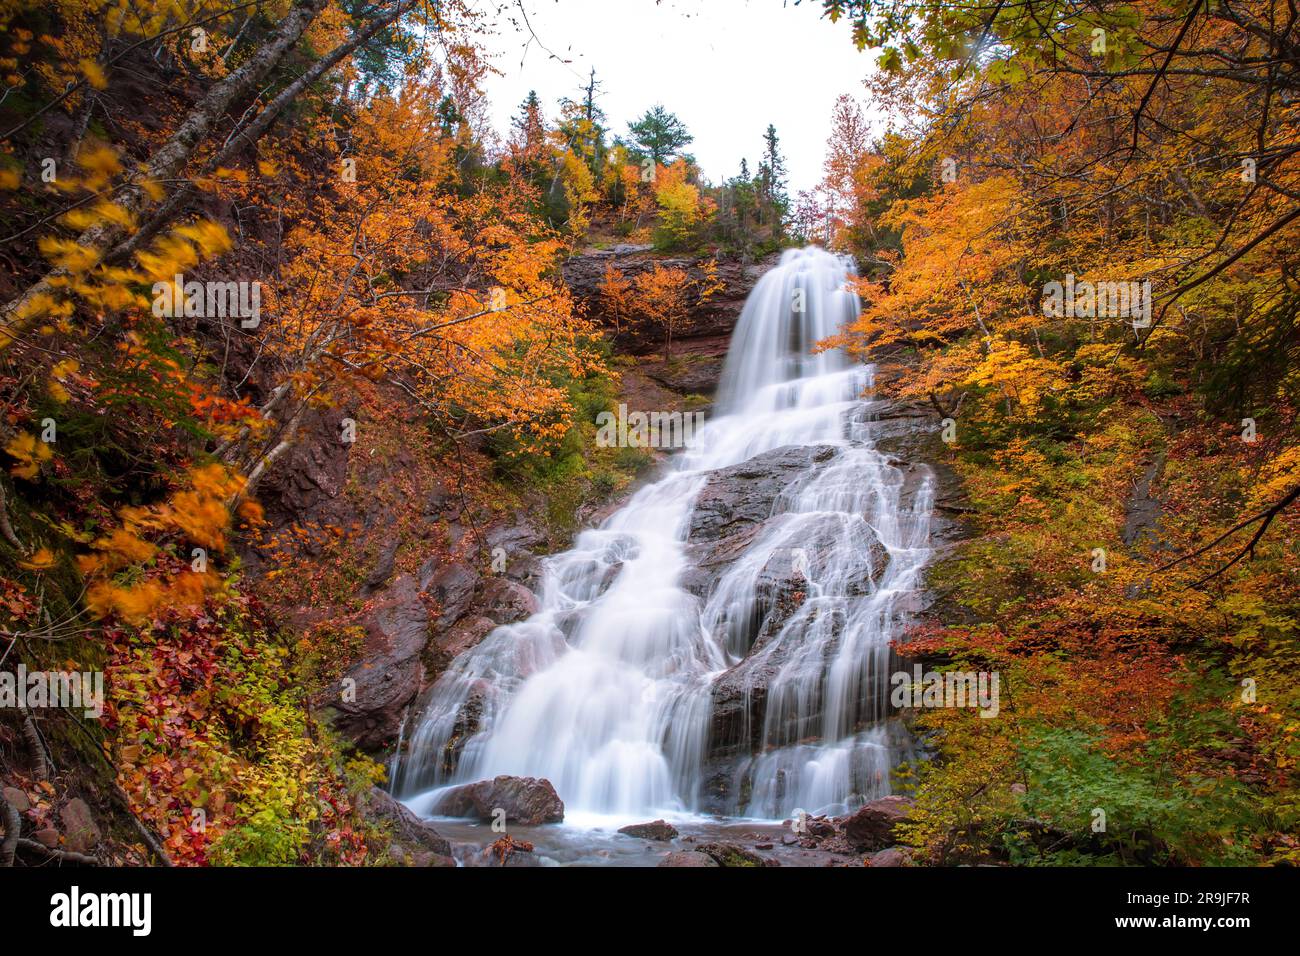 Beulach Ban Falls, Cape Breton -High water fall in an autumn forest landscape with dense trees, Cape Breton. Autumn waterfalls. Nova Scotia, Canada Stock Photo